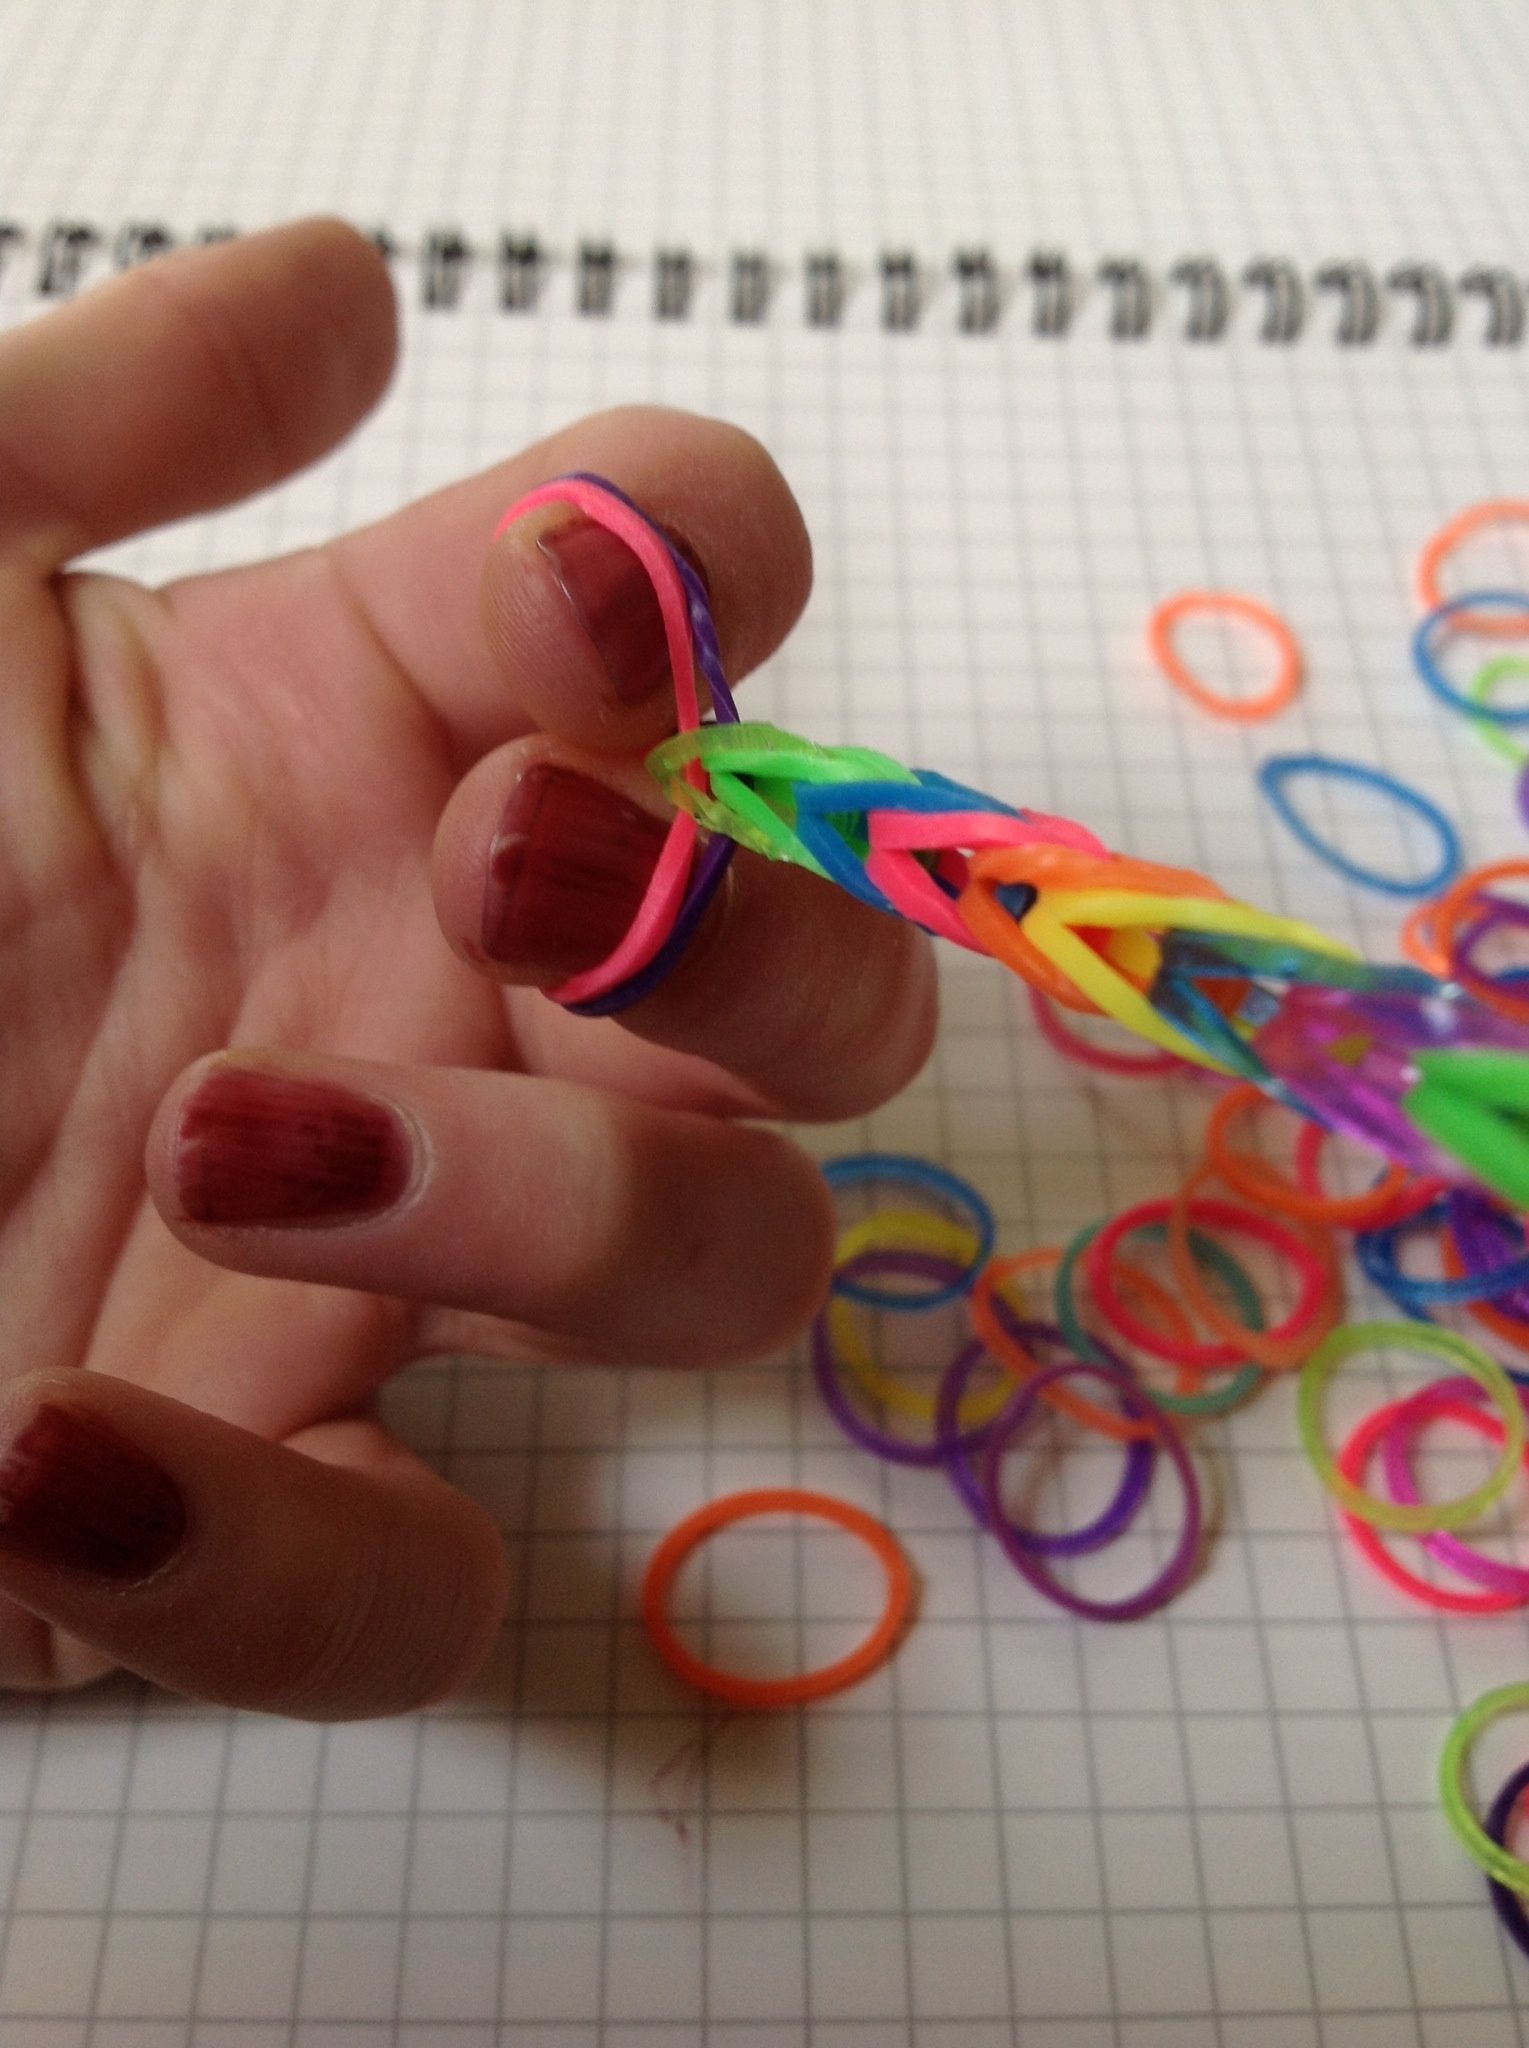 rainbow loom bracelets with fingers